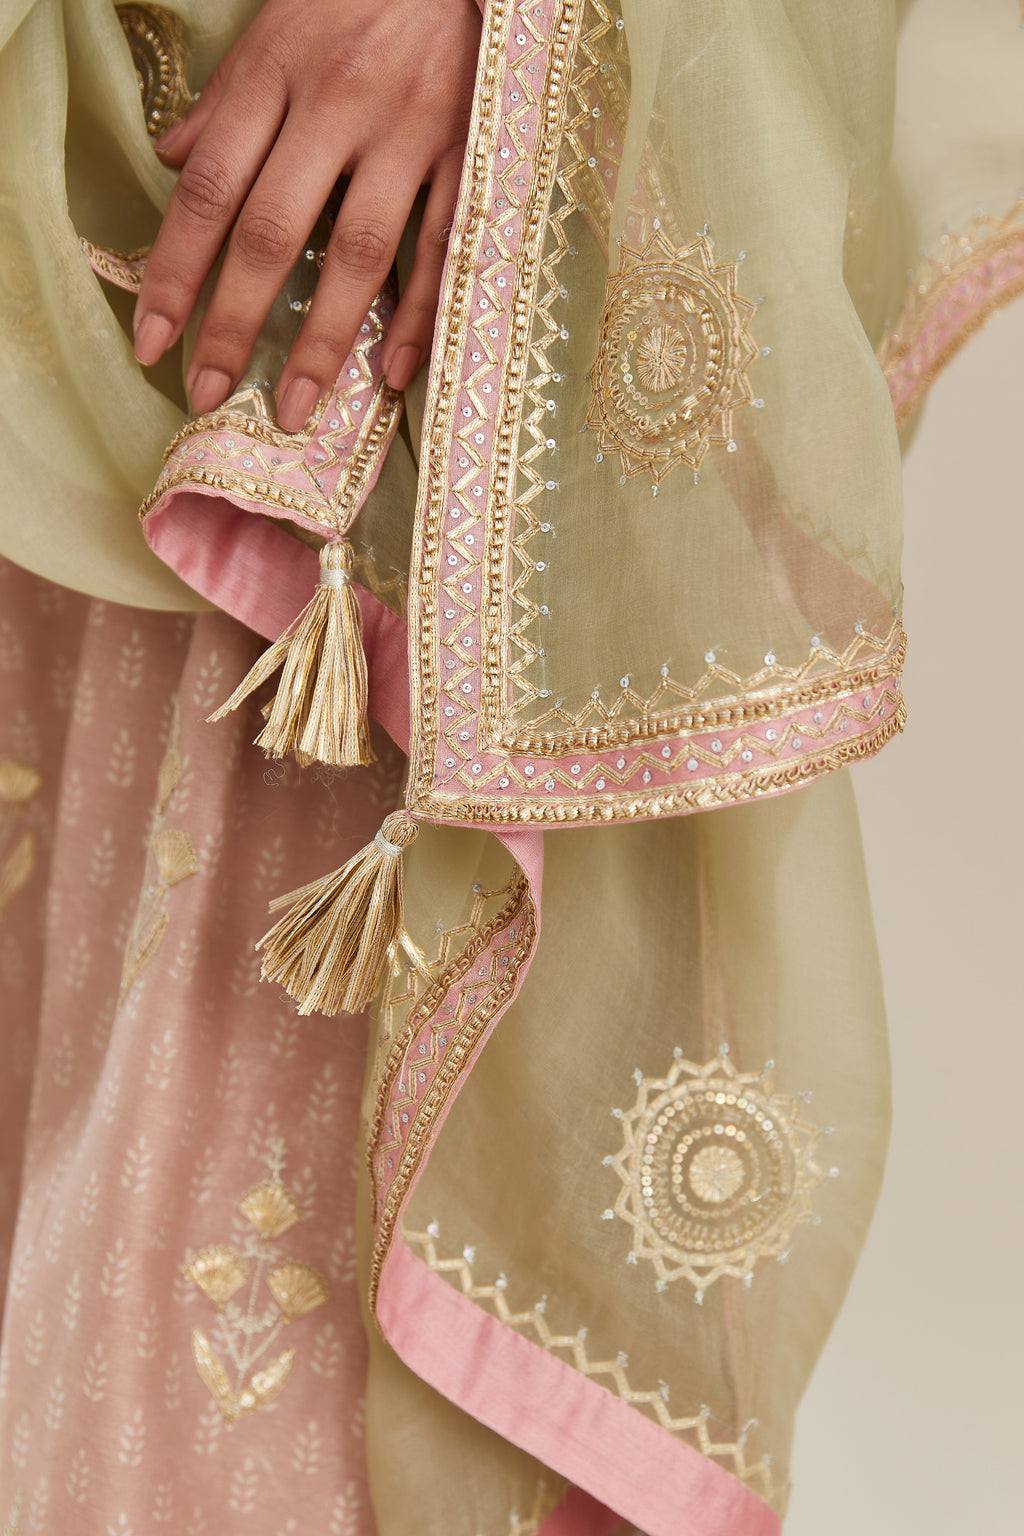 Old rose hand block printed silk chanderi kurta set with gold gota and zari embroidery butas and heavy borders at hem.